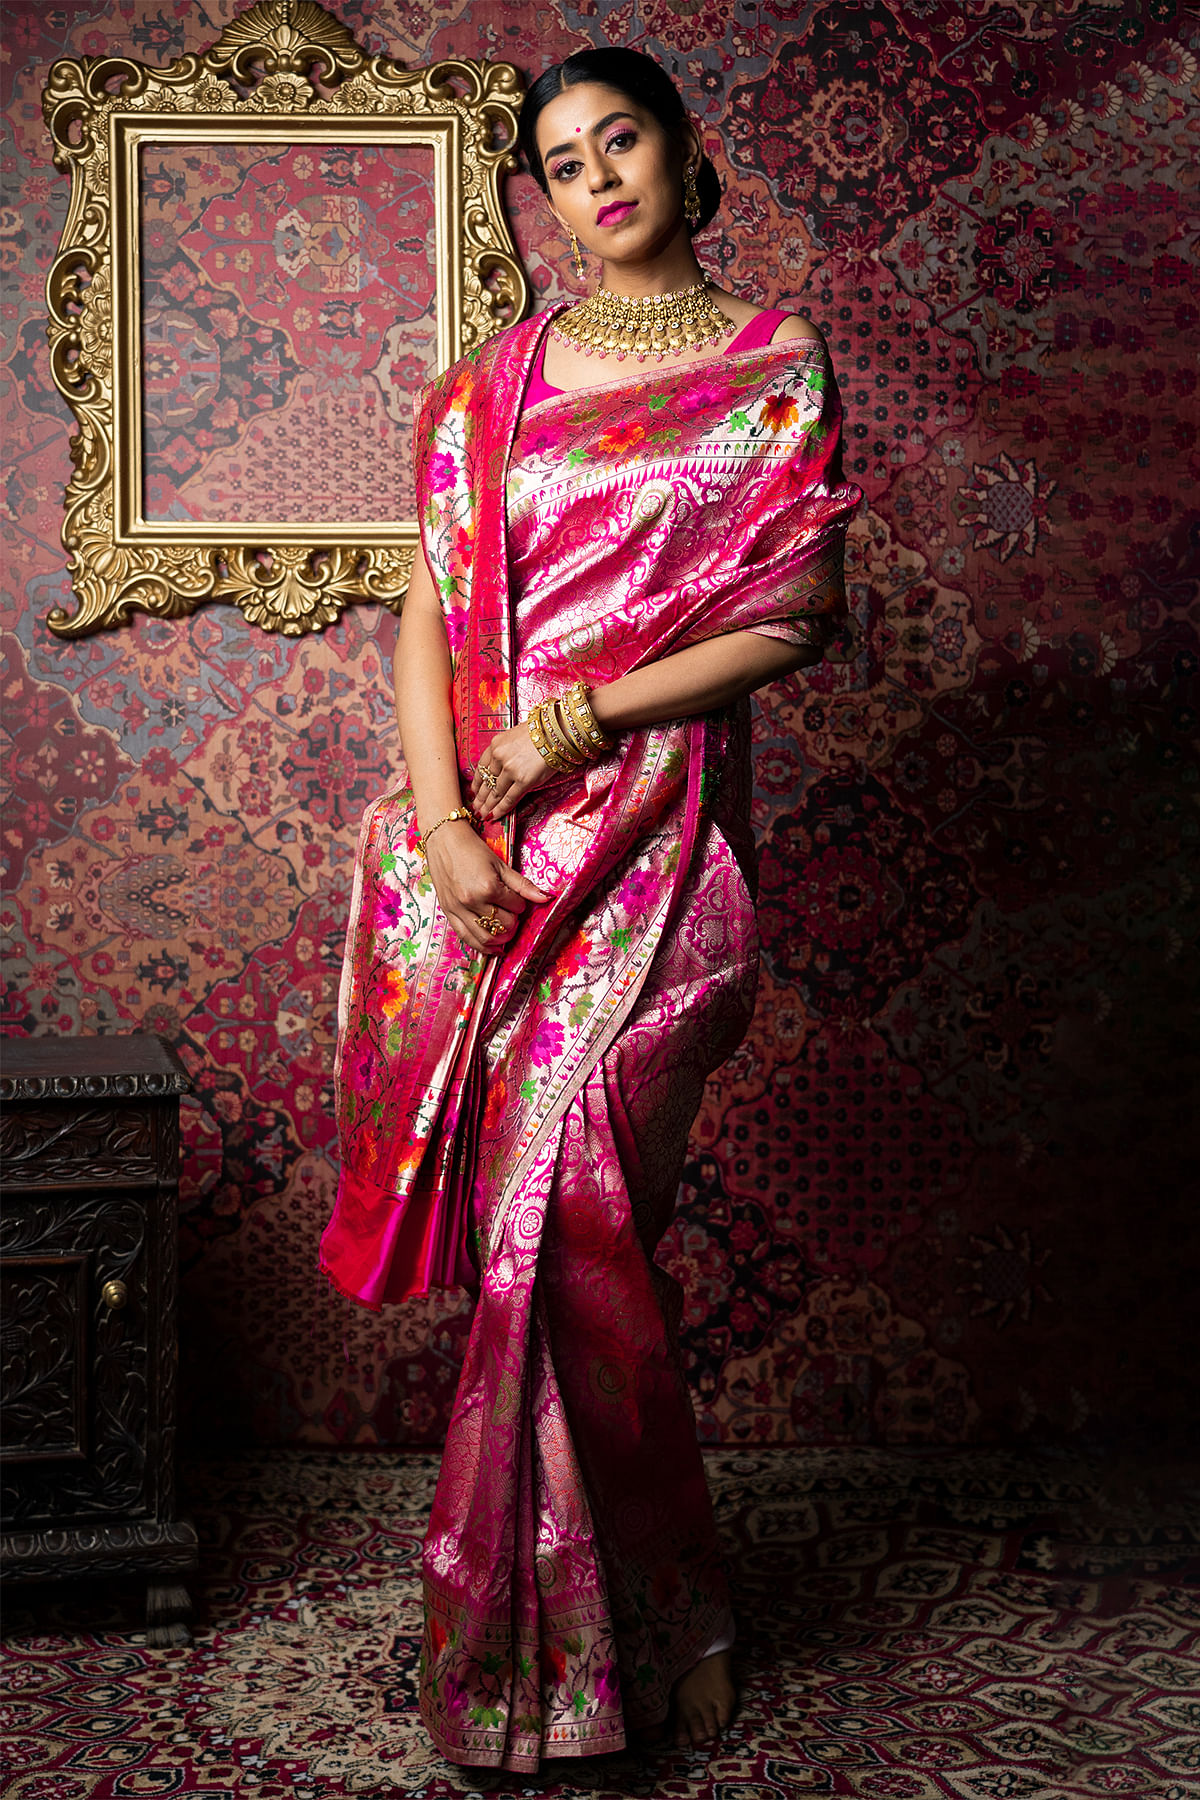 Banarasi Saree - The Queen Of Indian Attire